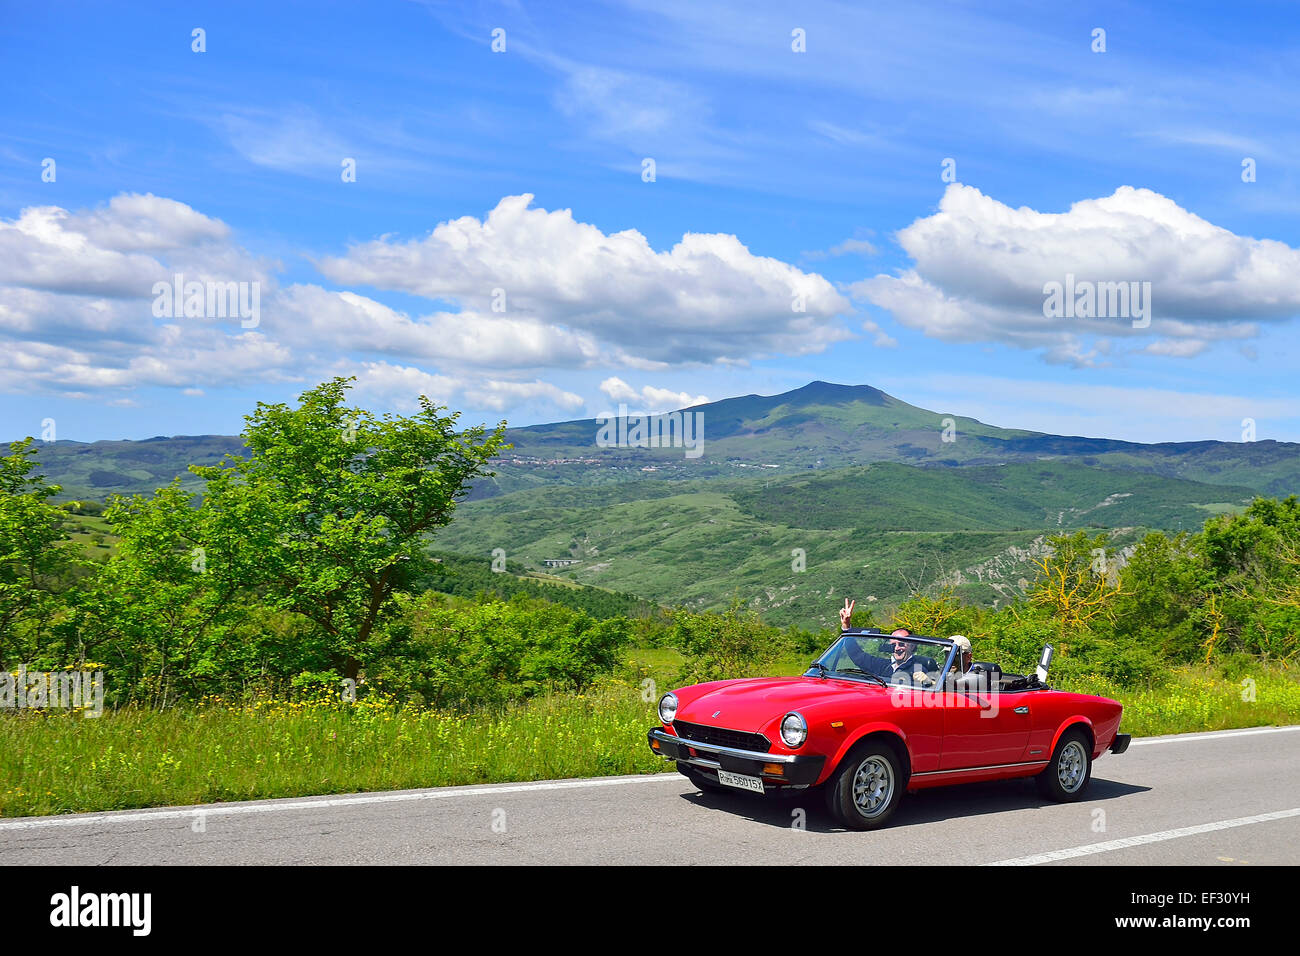 Fiat 124 Spider convertible, classic car, on road through hilly landscape, near Radicofani, Tuscany, Italy Stock Photo